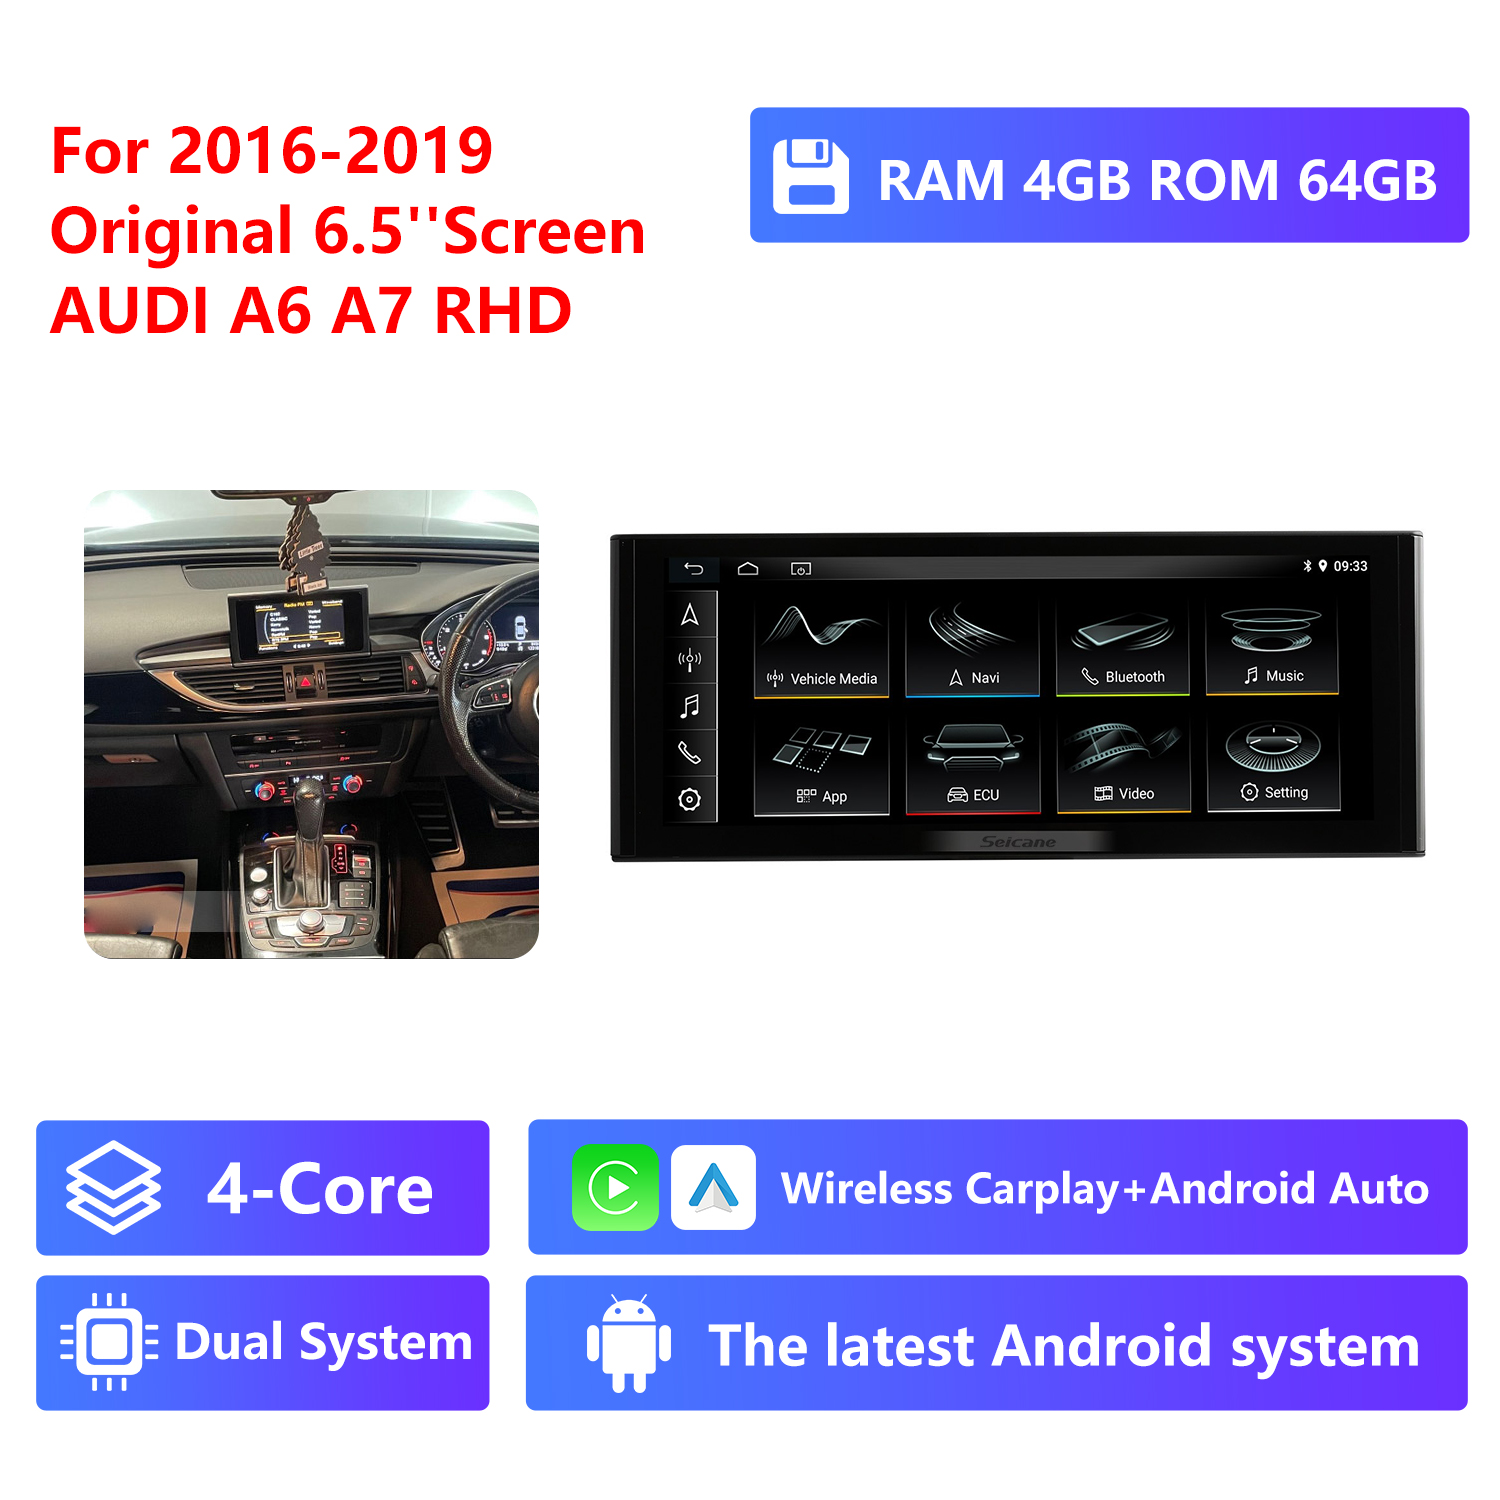 4-Core RAM 4G ROM 64G,2016-2019, Original 6.5"Screen,RHD